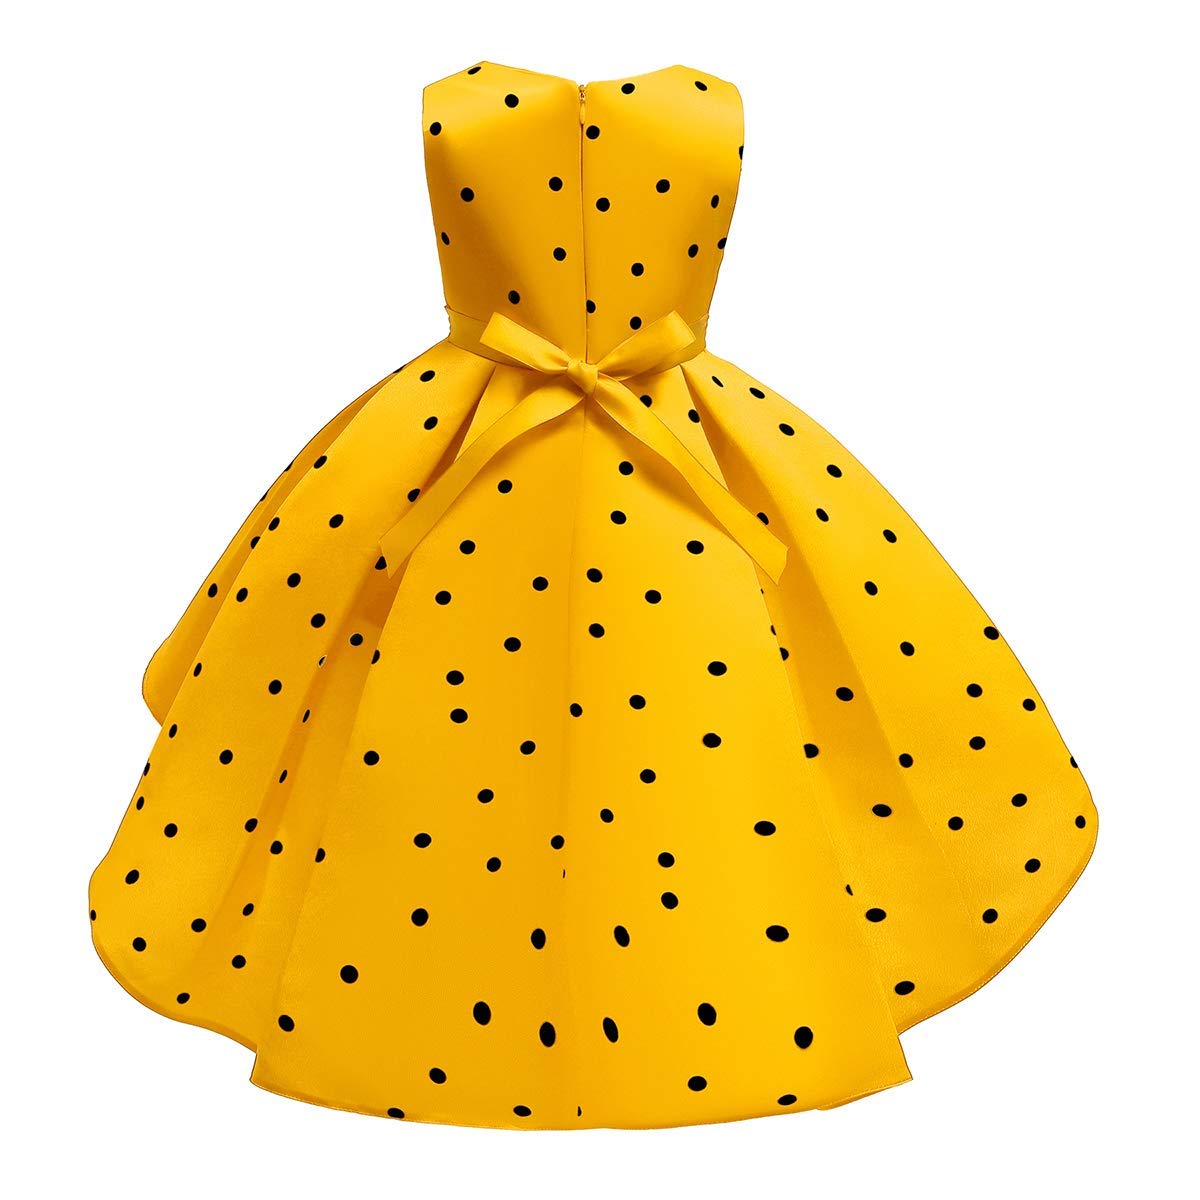 IBTOM CASTLE Mini Polka Dots Dress for Baby Girls Halloween Princess Birthday Party Costume Carnival Fancy Dress Up Playwear